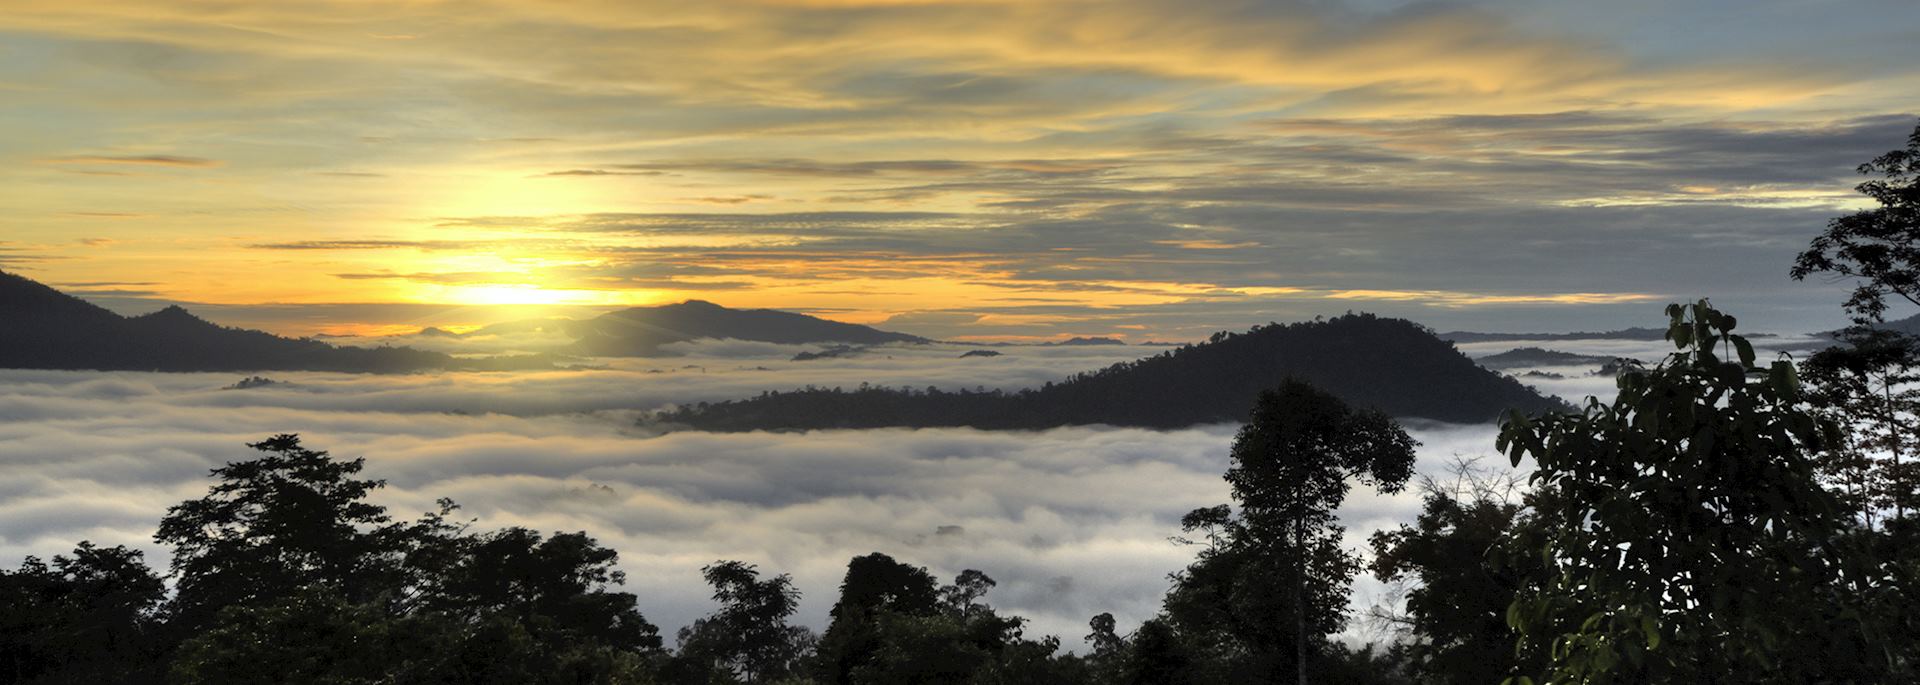 Danum Valley, sunset, Island of Borneo